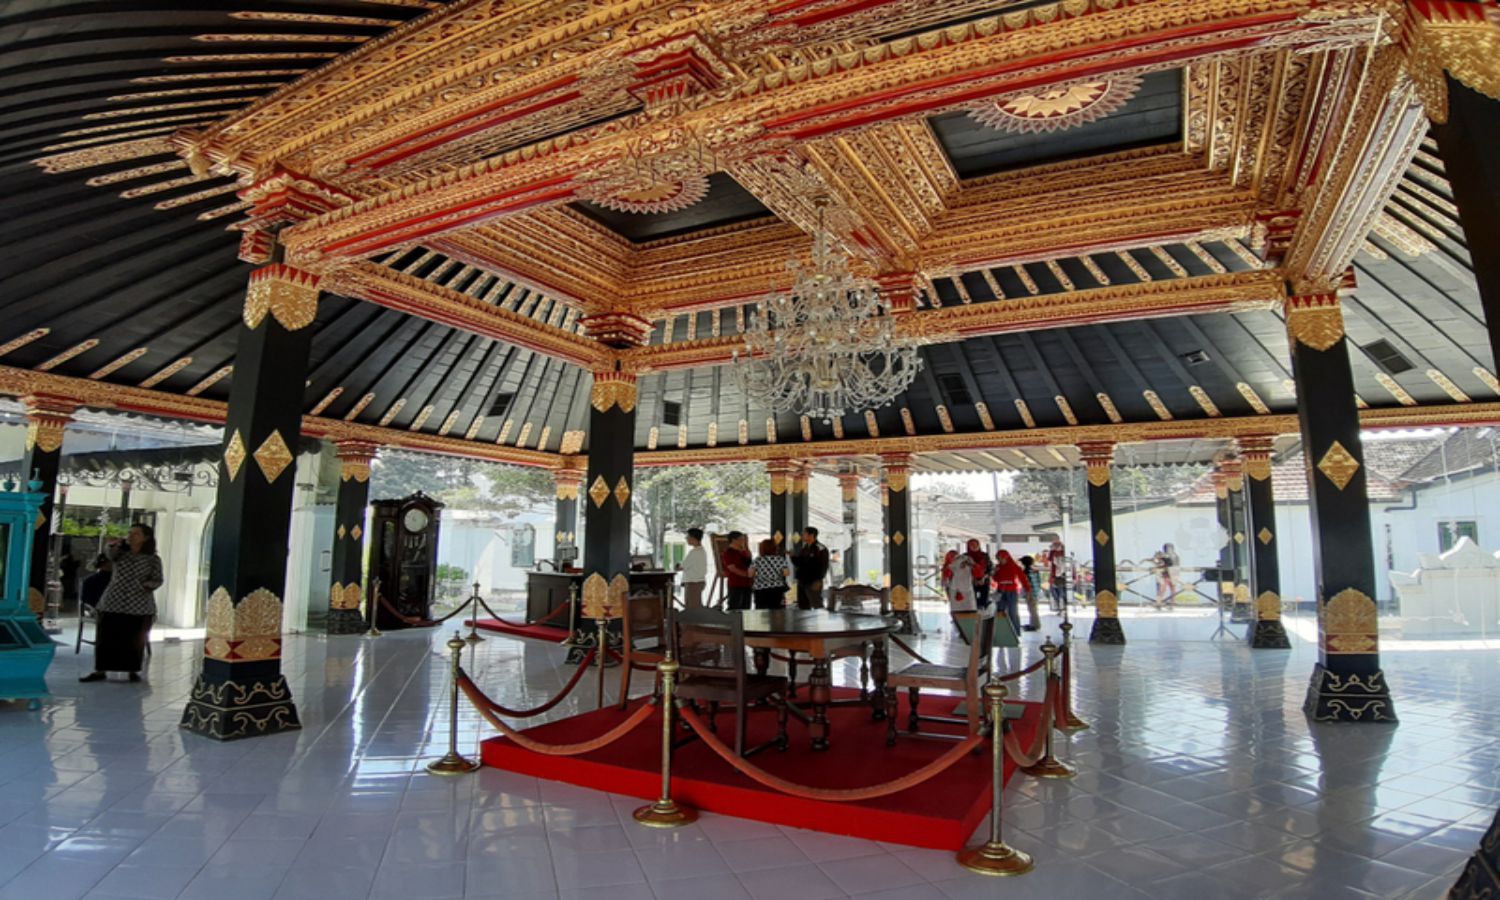 Galeria Mall Bali